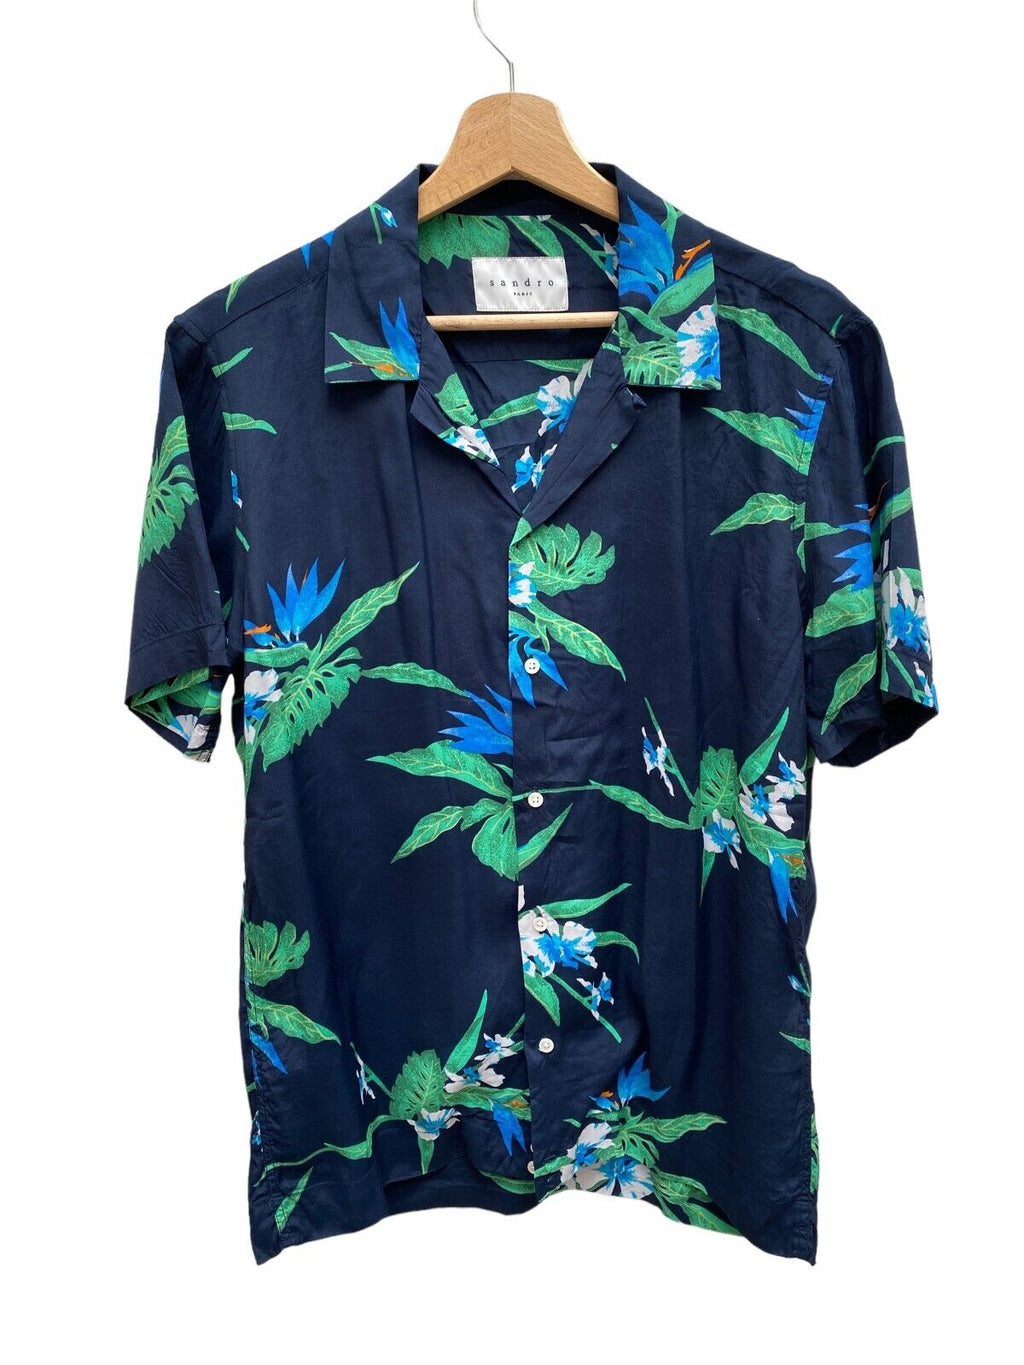 Sandro Paris Duke Navy Hawaiian Shirt Bowling Fit  Size L fits M